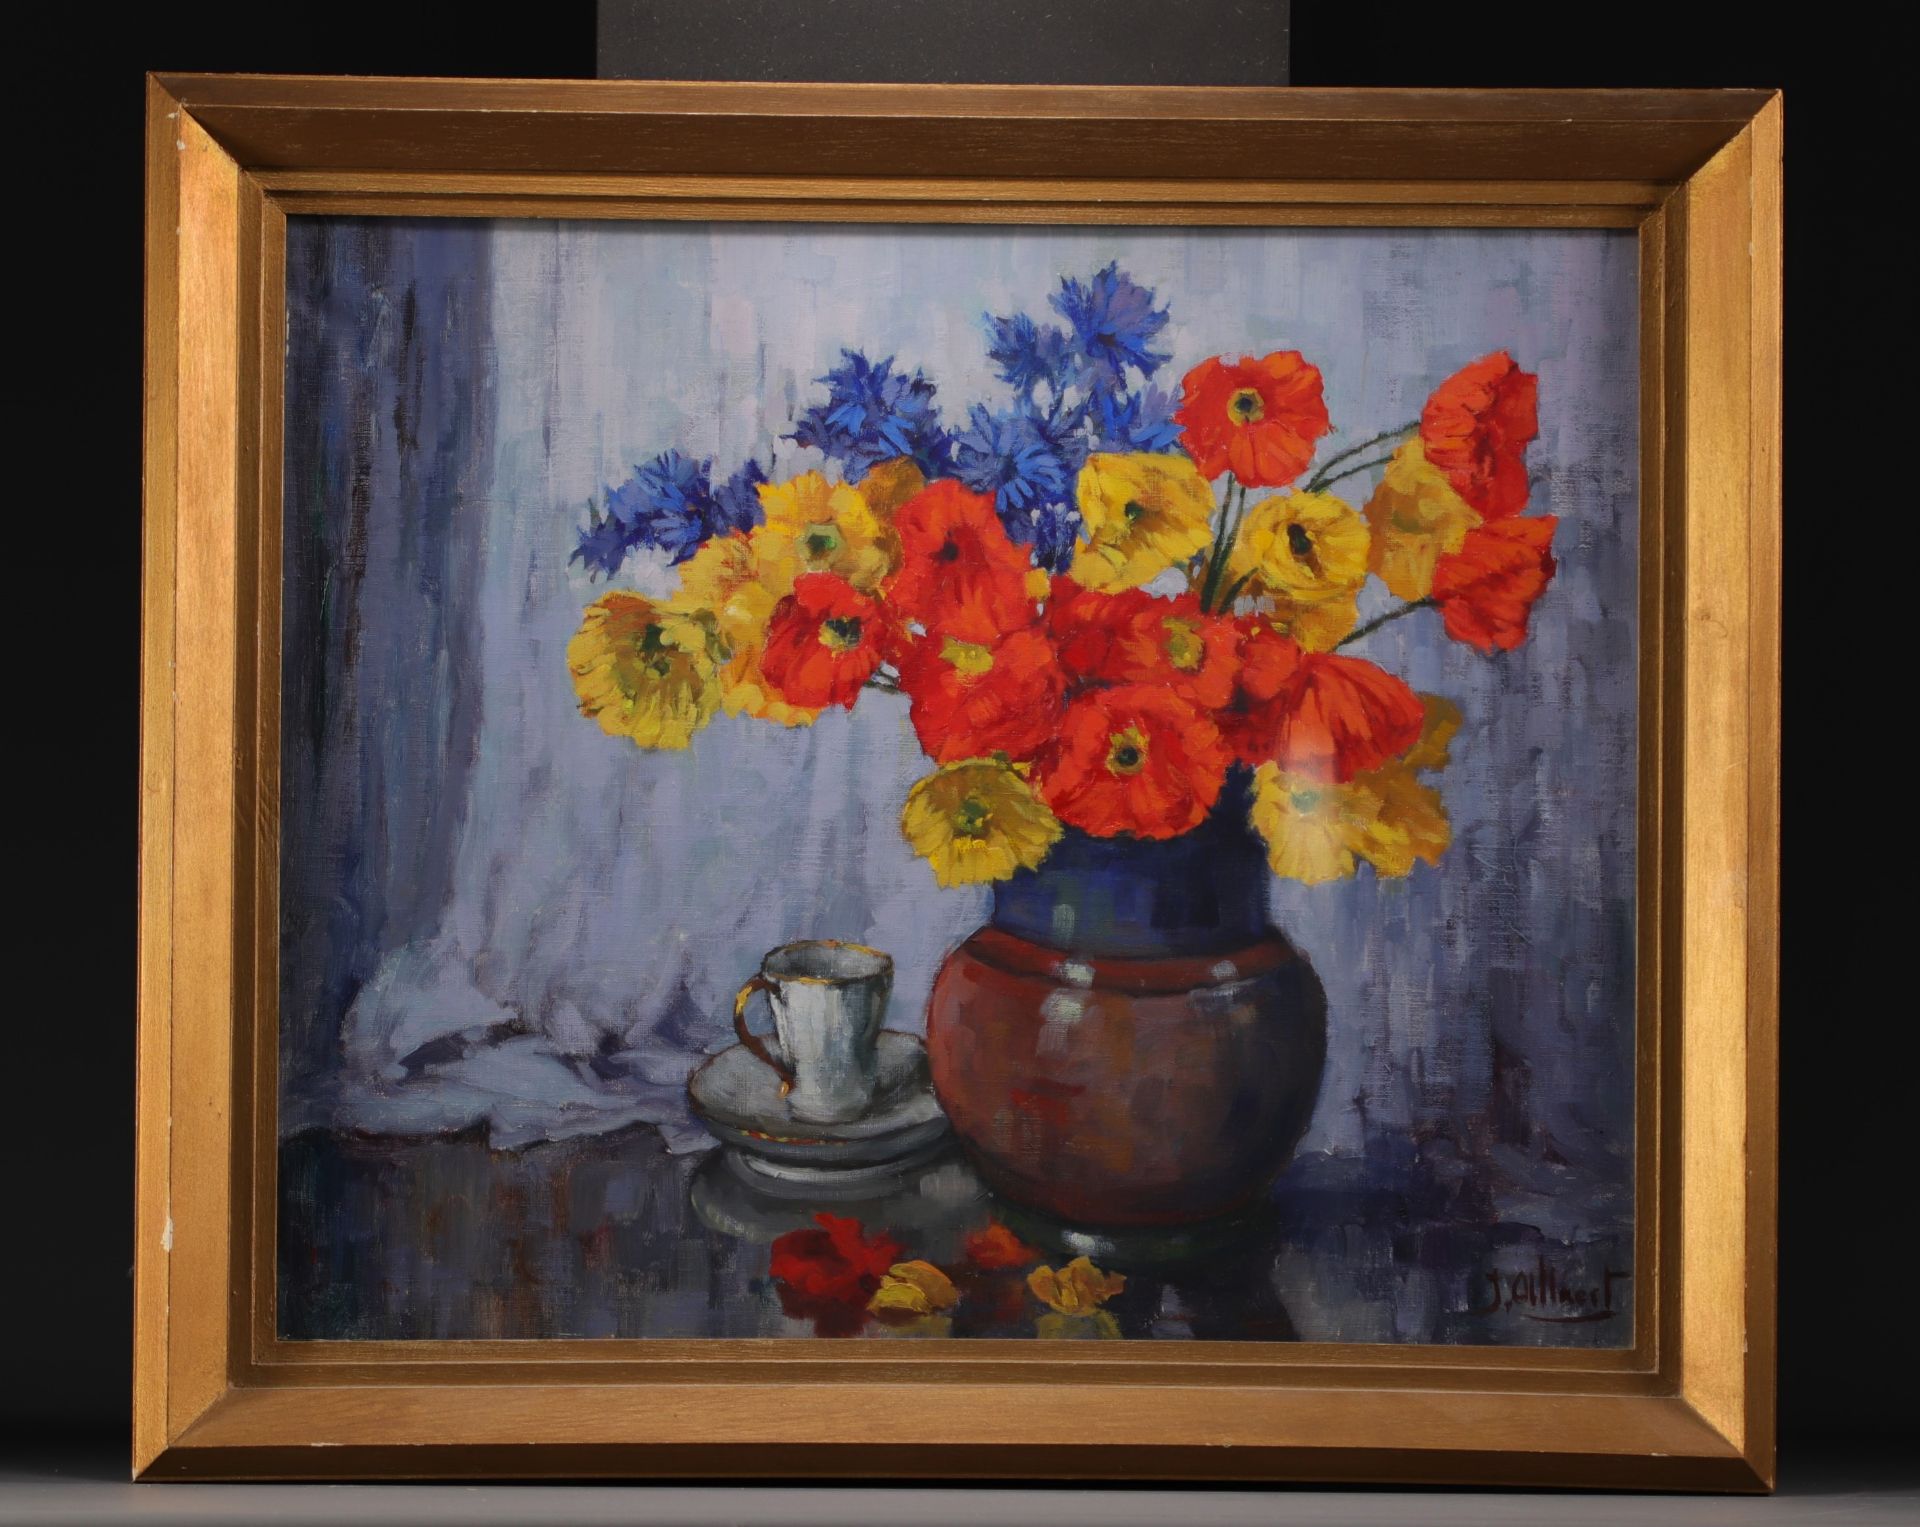 Jacques Lieven ALLAERT (1900-1975) "Still life with flowers" Oil on canvas, circa 1930/40. - Bild 2 aus 2